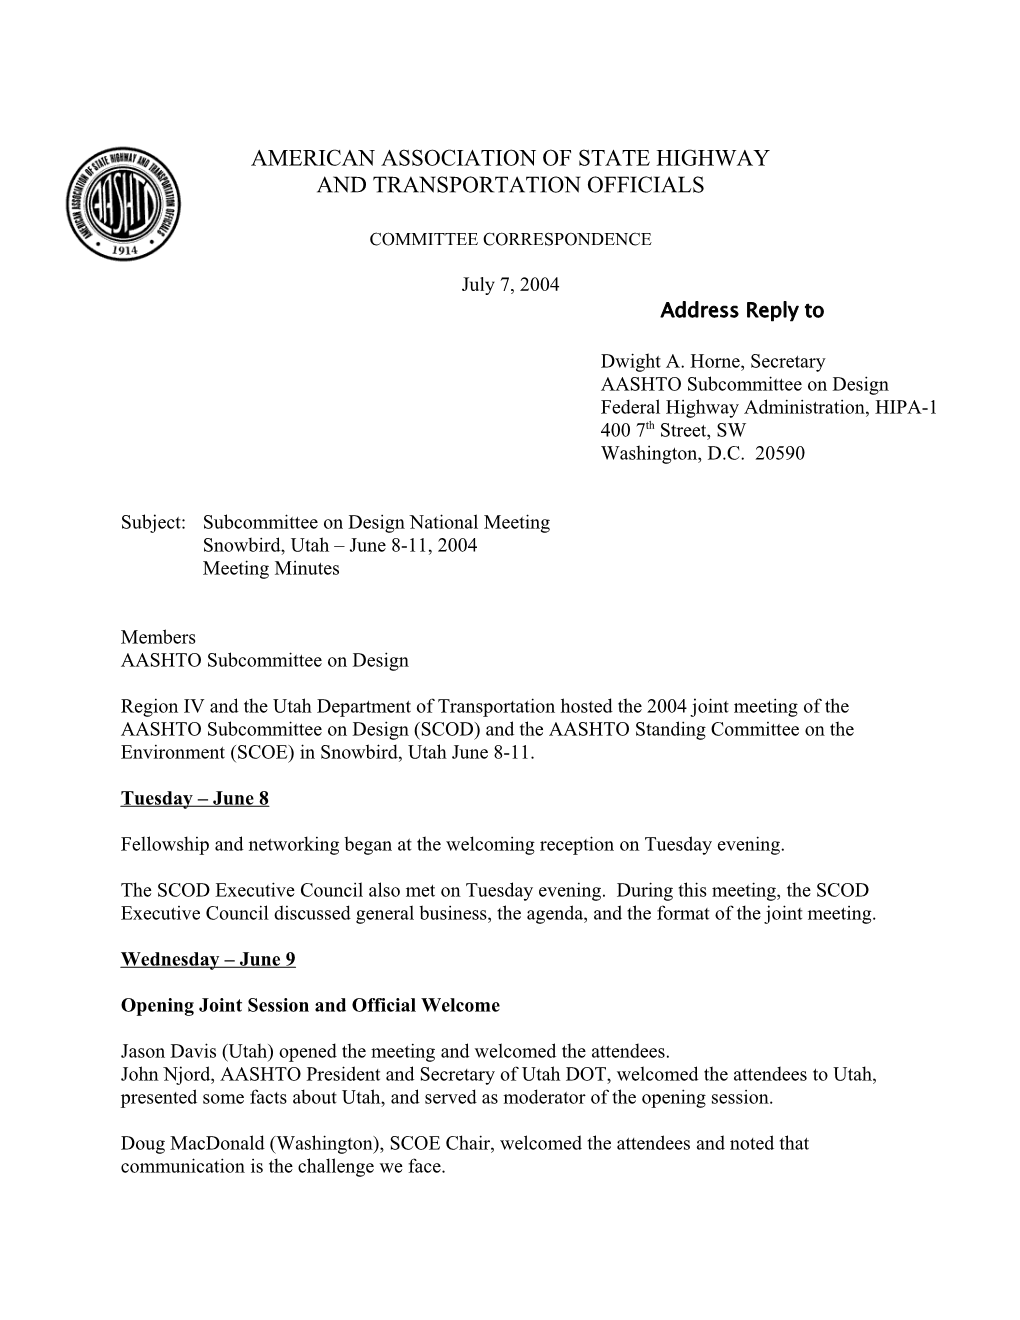 SCOD Meeting Minutes 2004